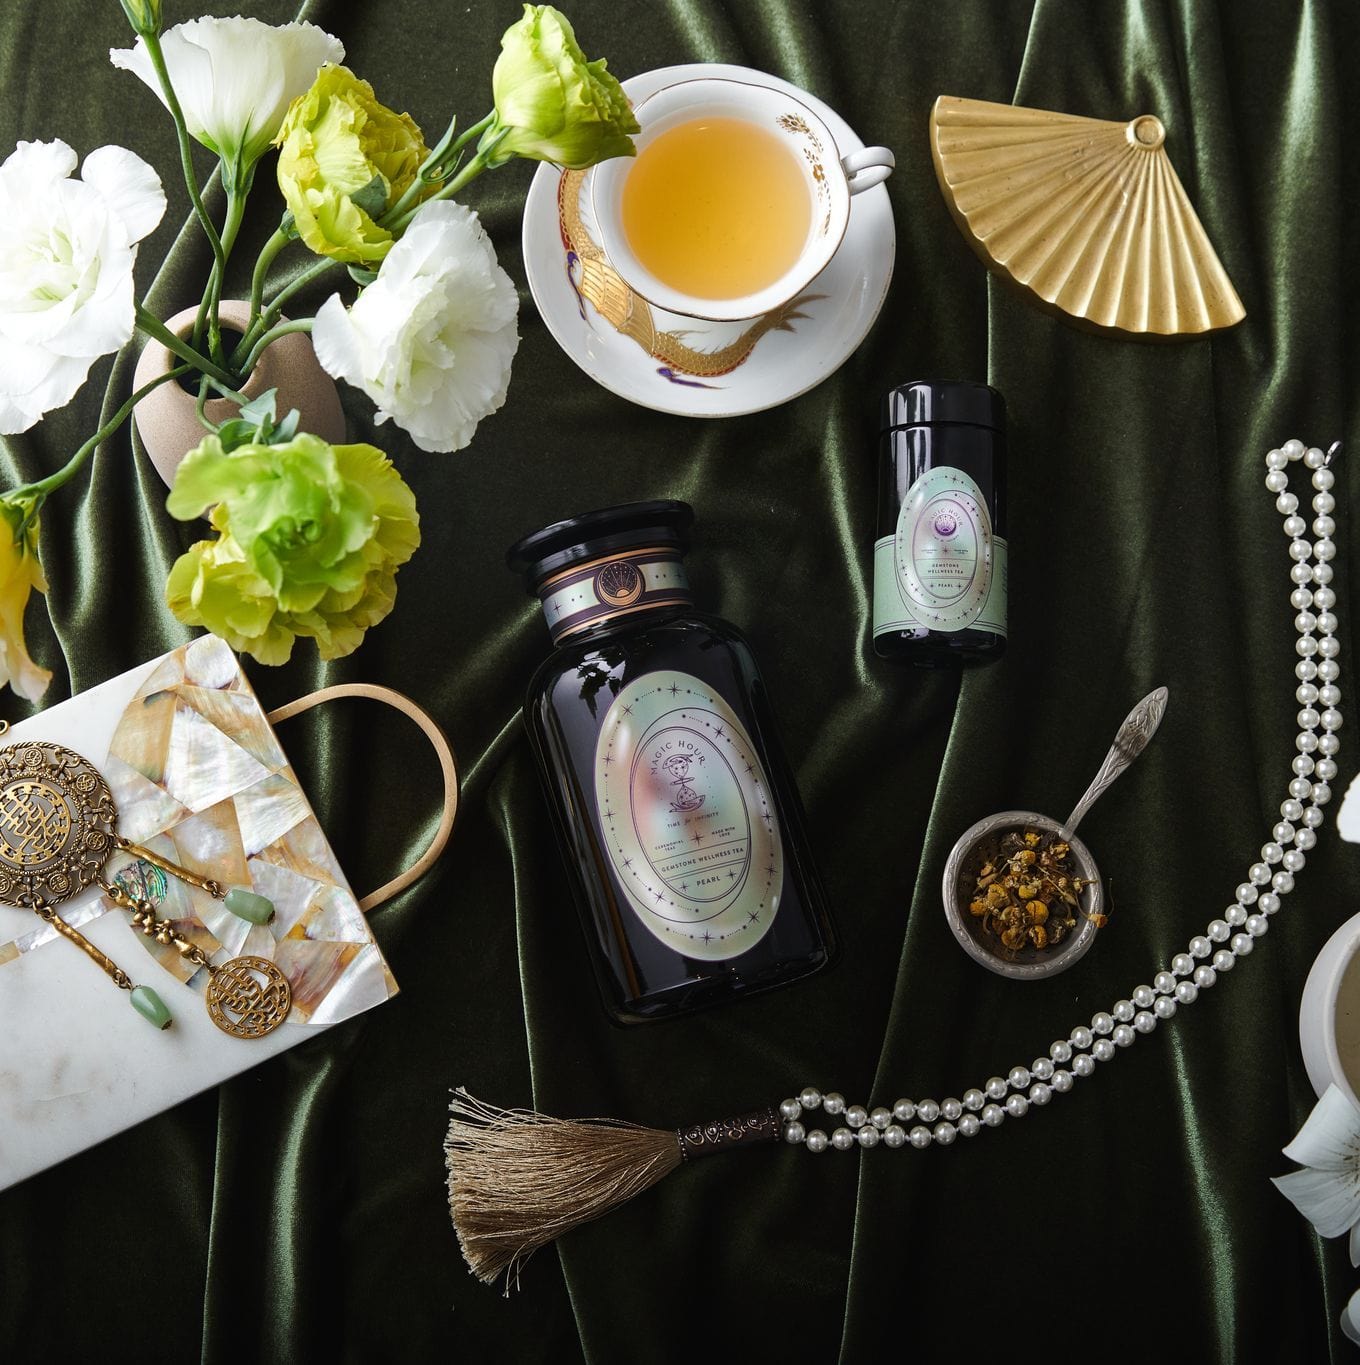 Pearl Tea of Beauty, Clarity, and a Sense of Peace